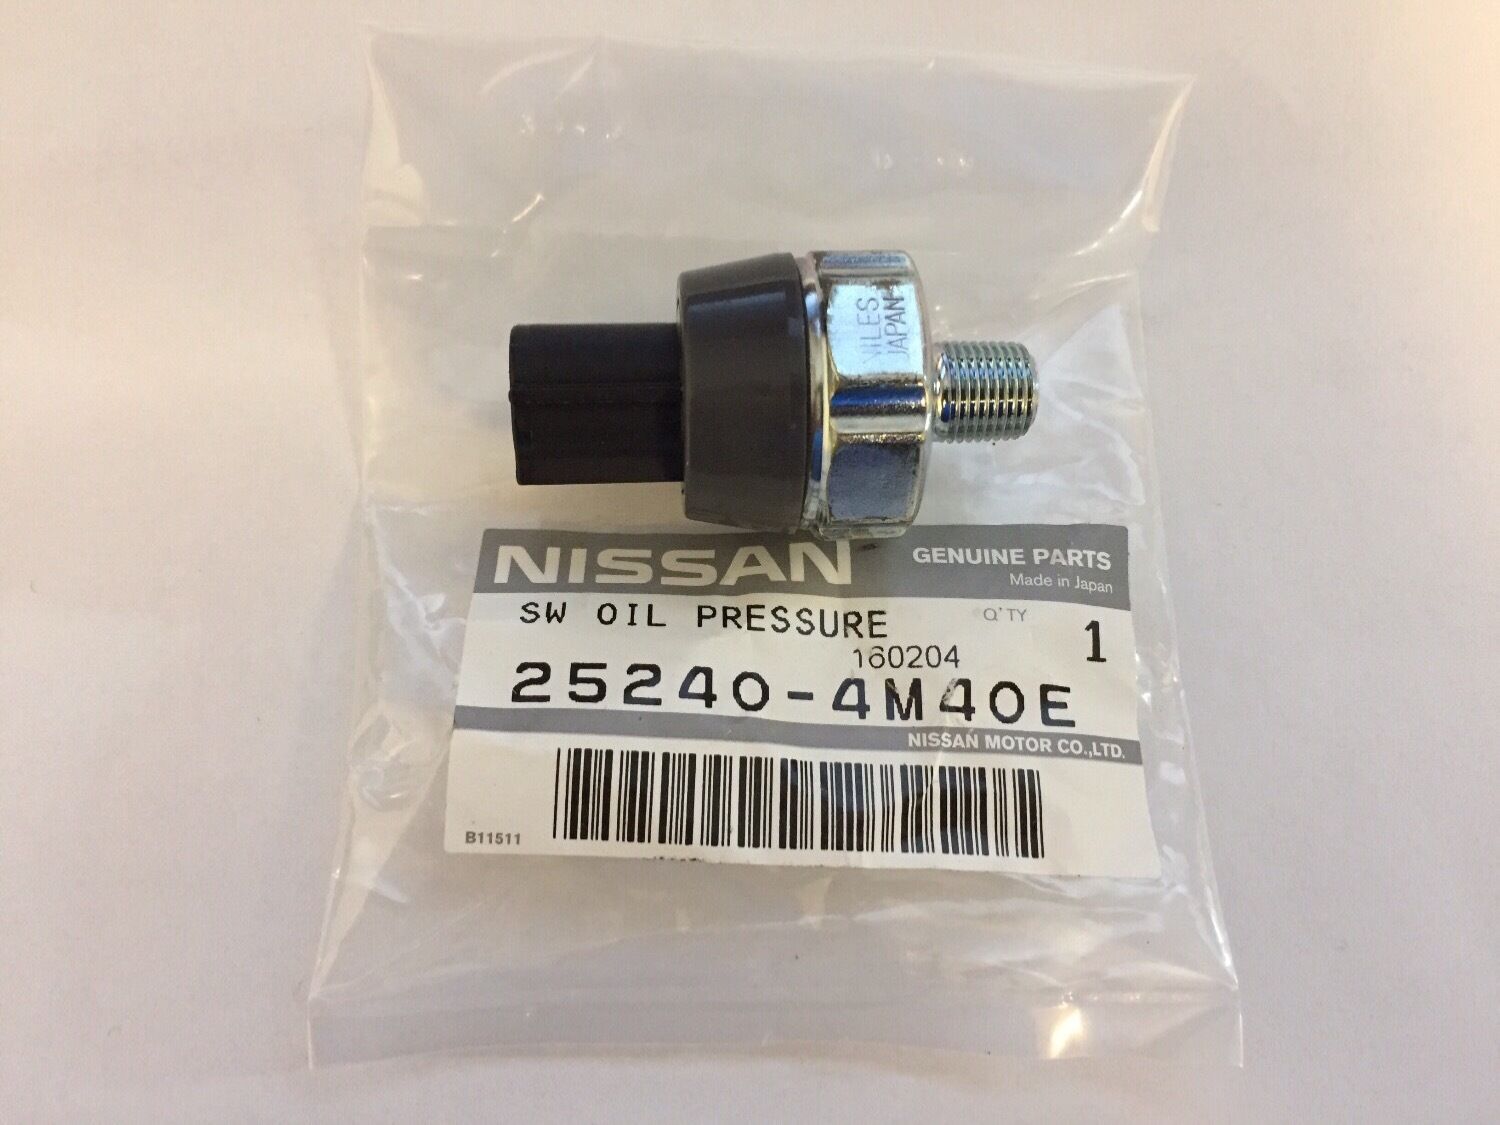 NISSAN OEM-Oil Pressure Sending Unit 252404M40E - Single Pin Connector